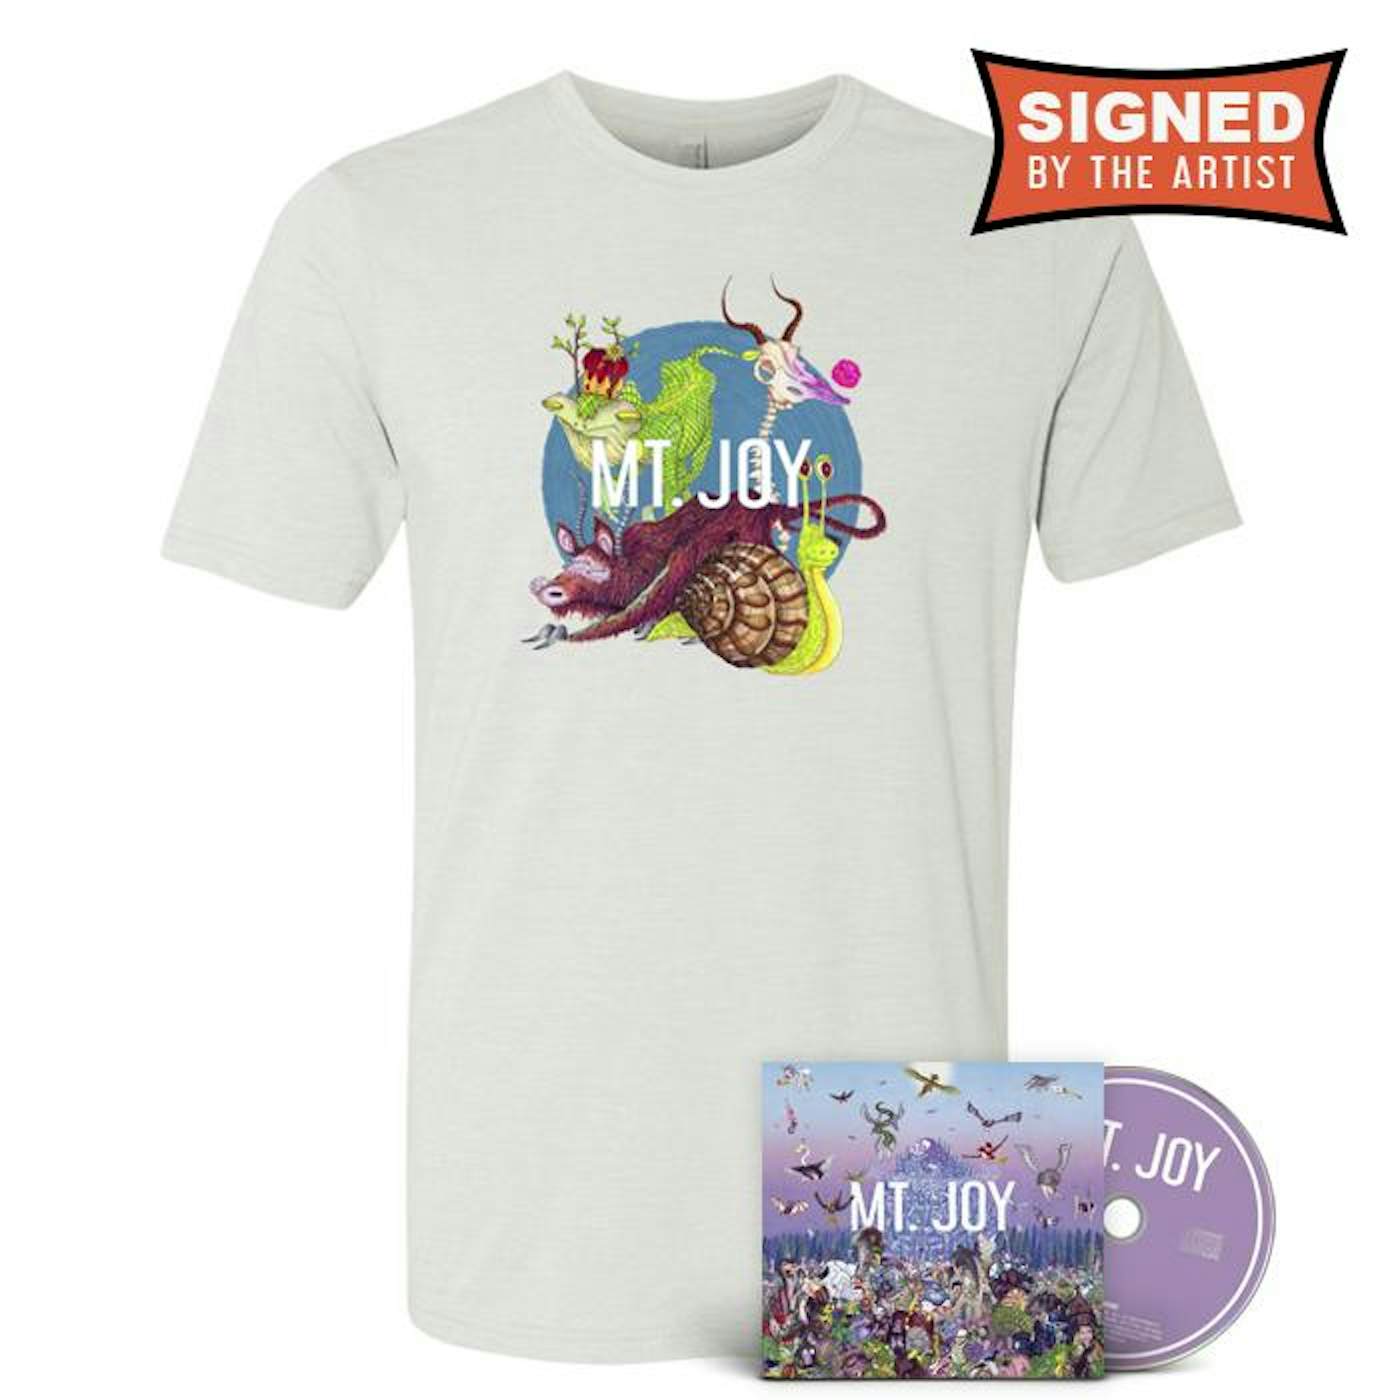 Mt. Joy Rearrange Us (Shirt + Signed CD)